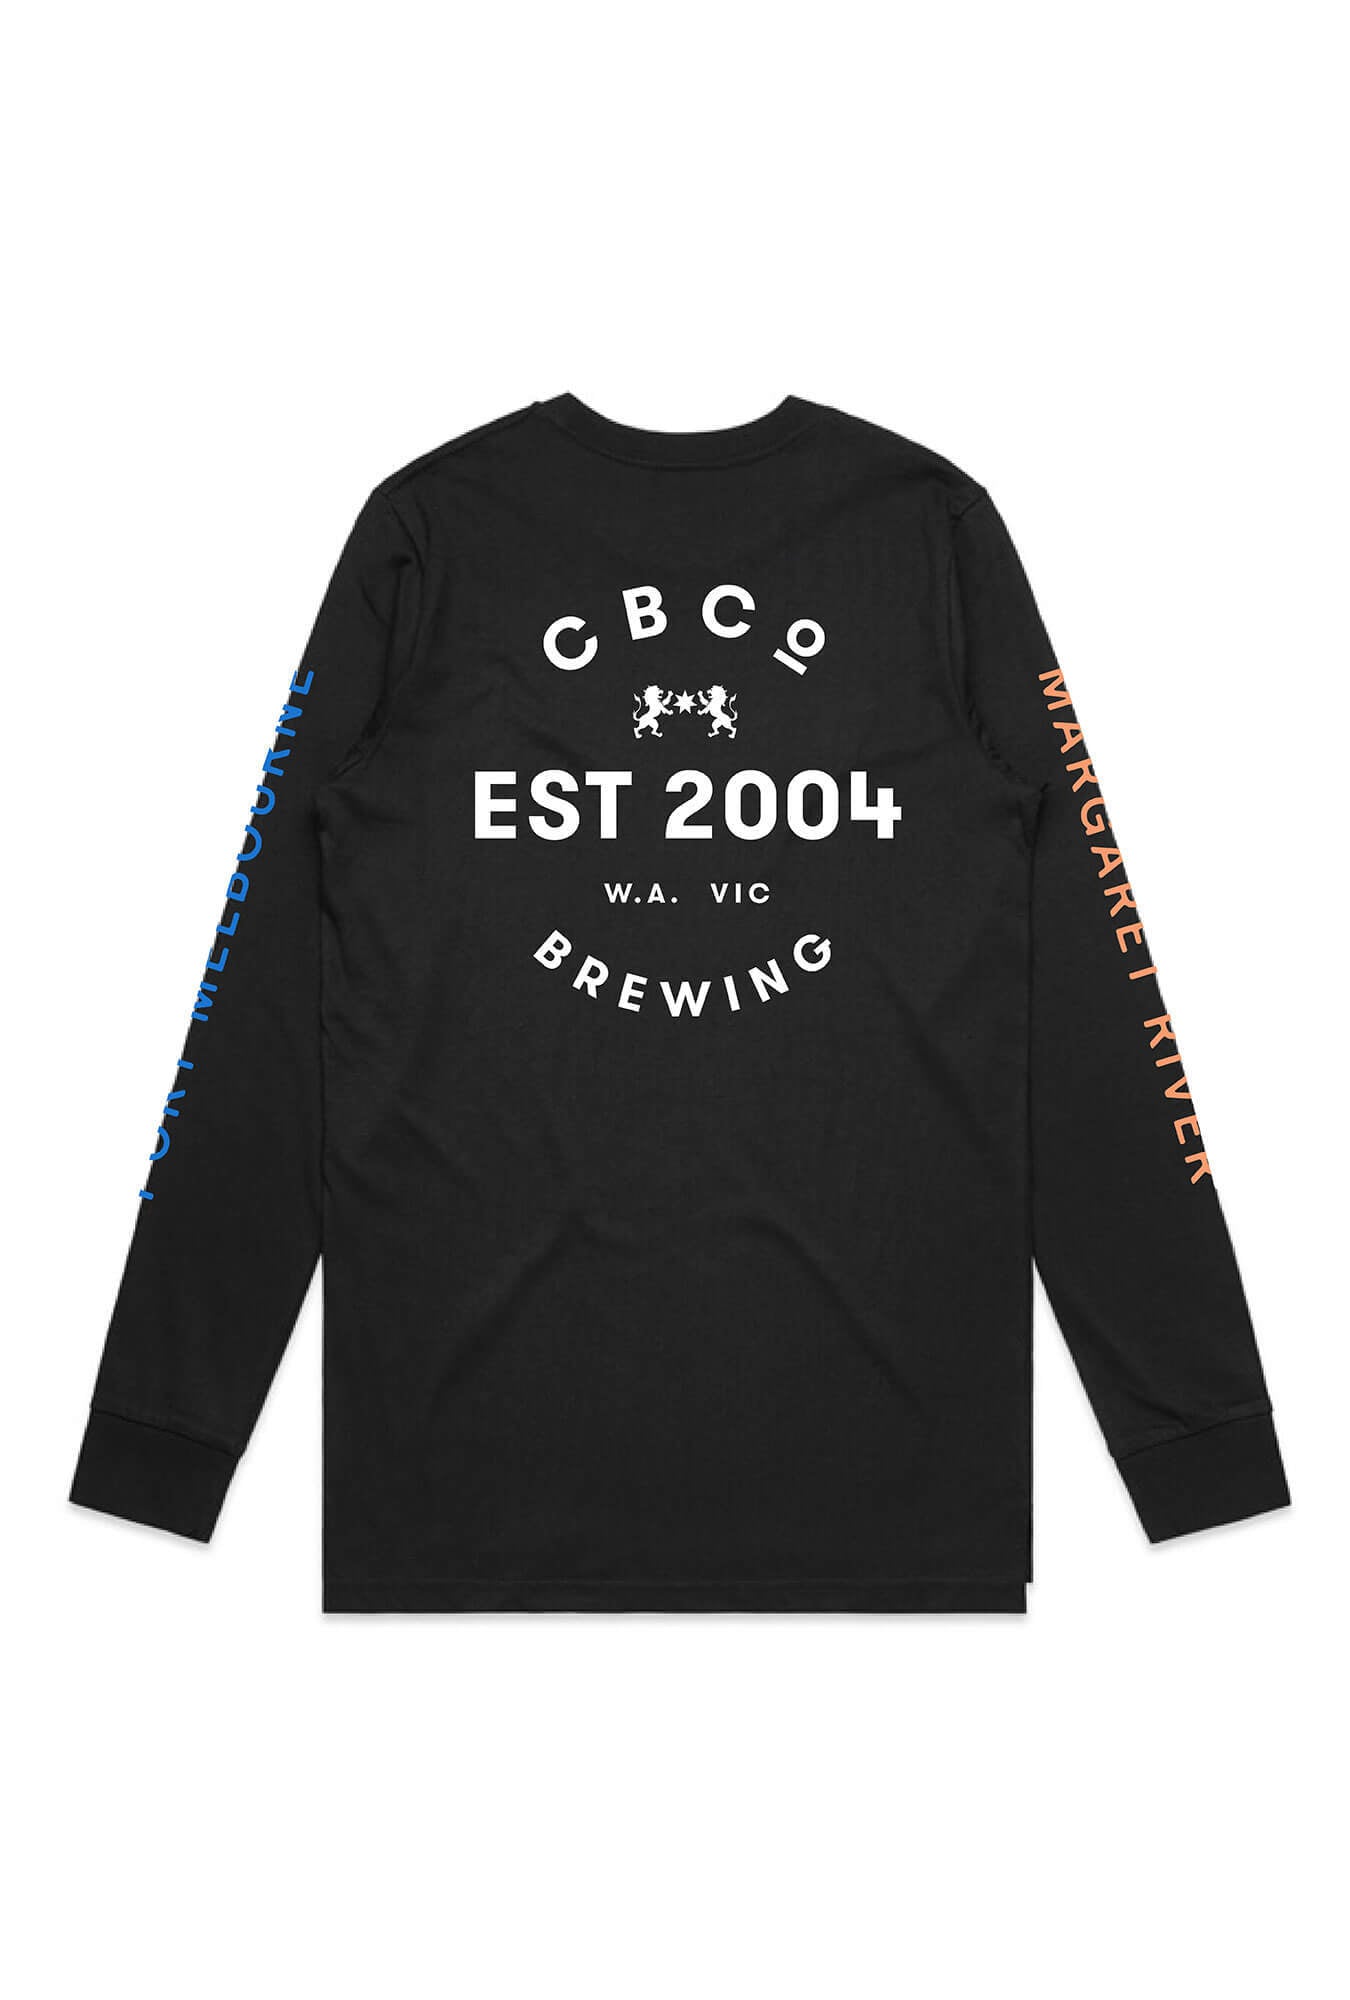 CBCo Brewing Long Sleeve Black